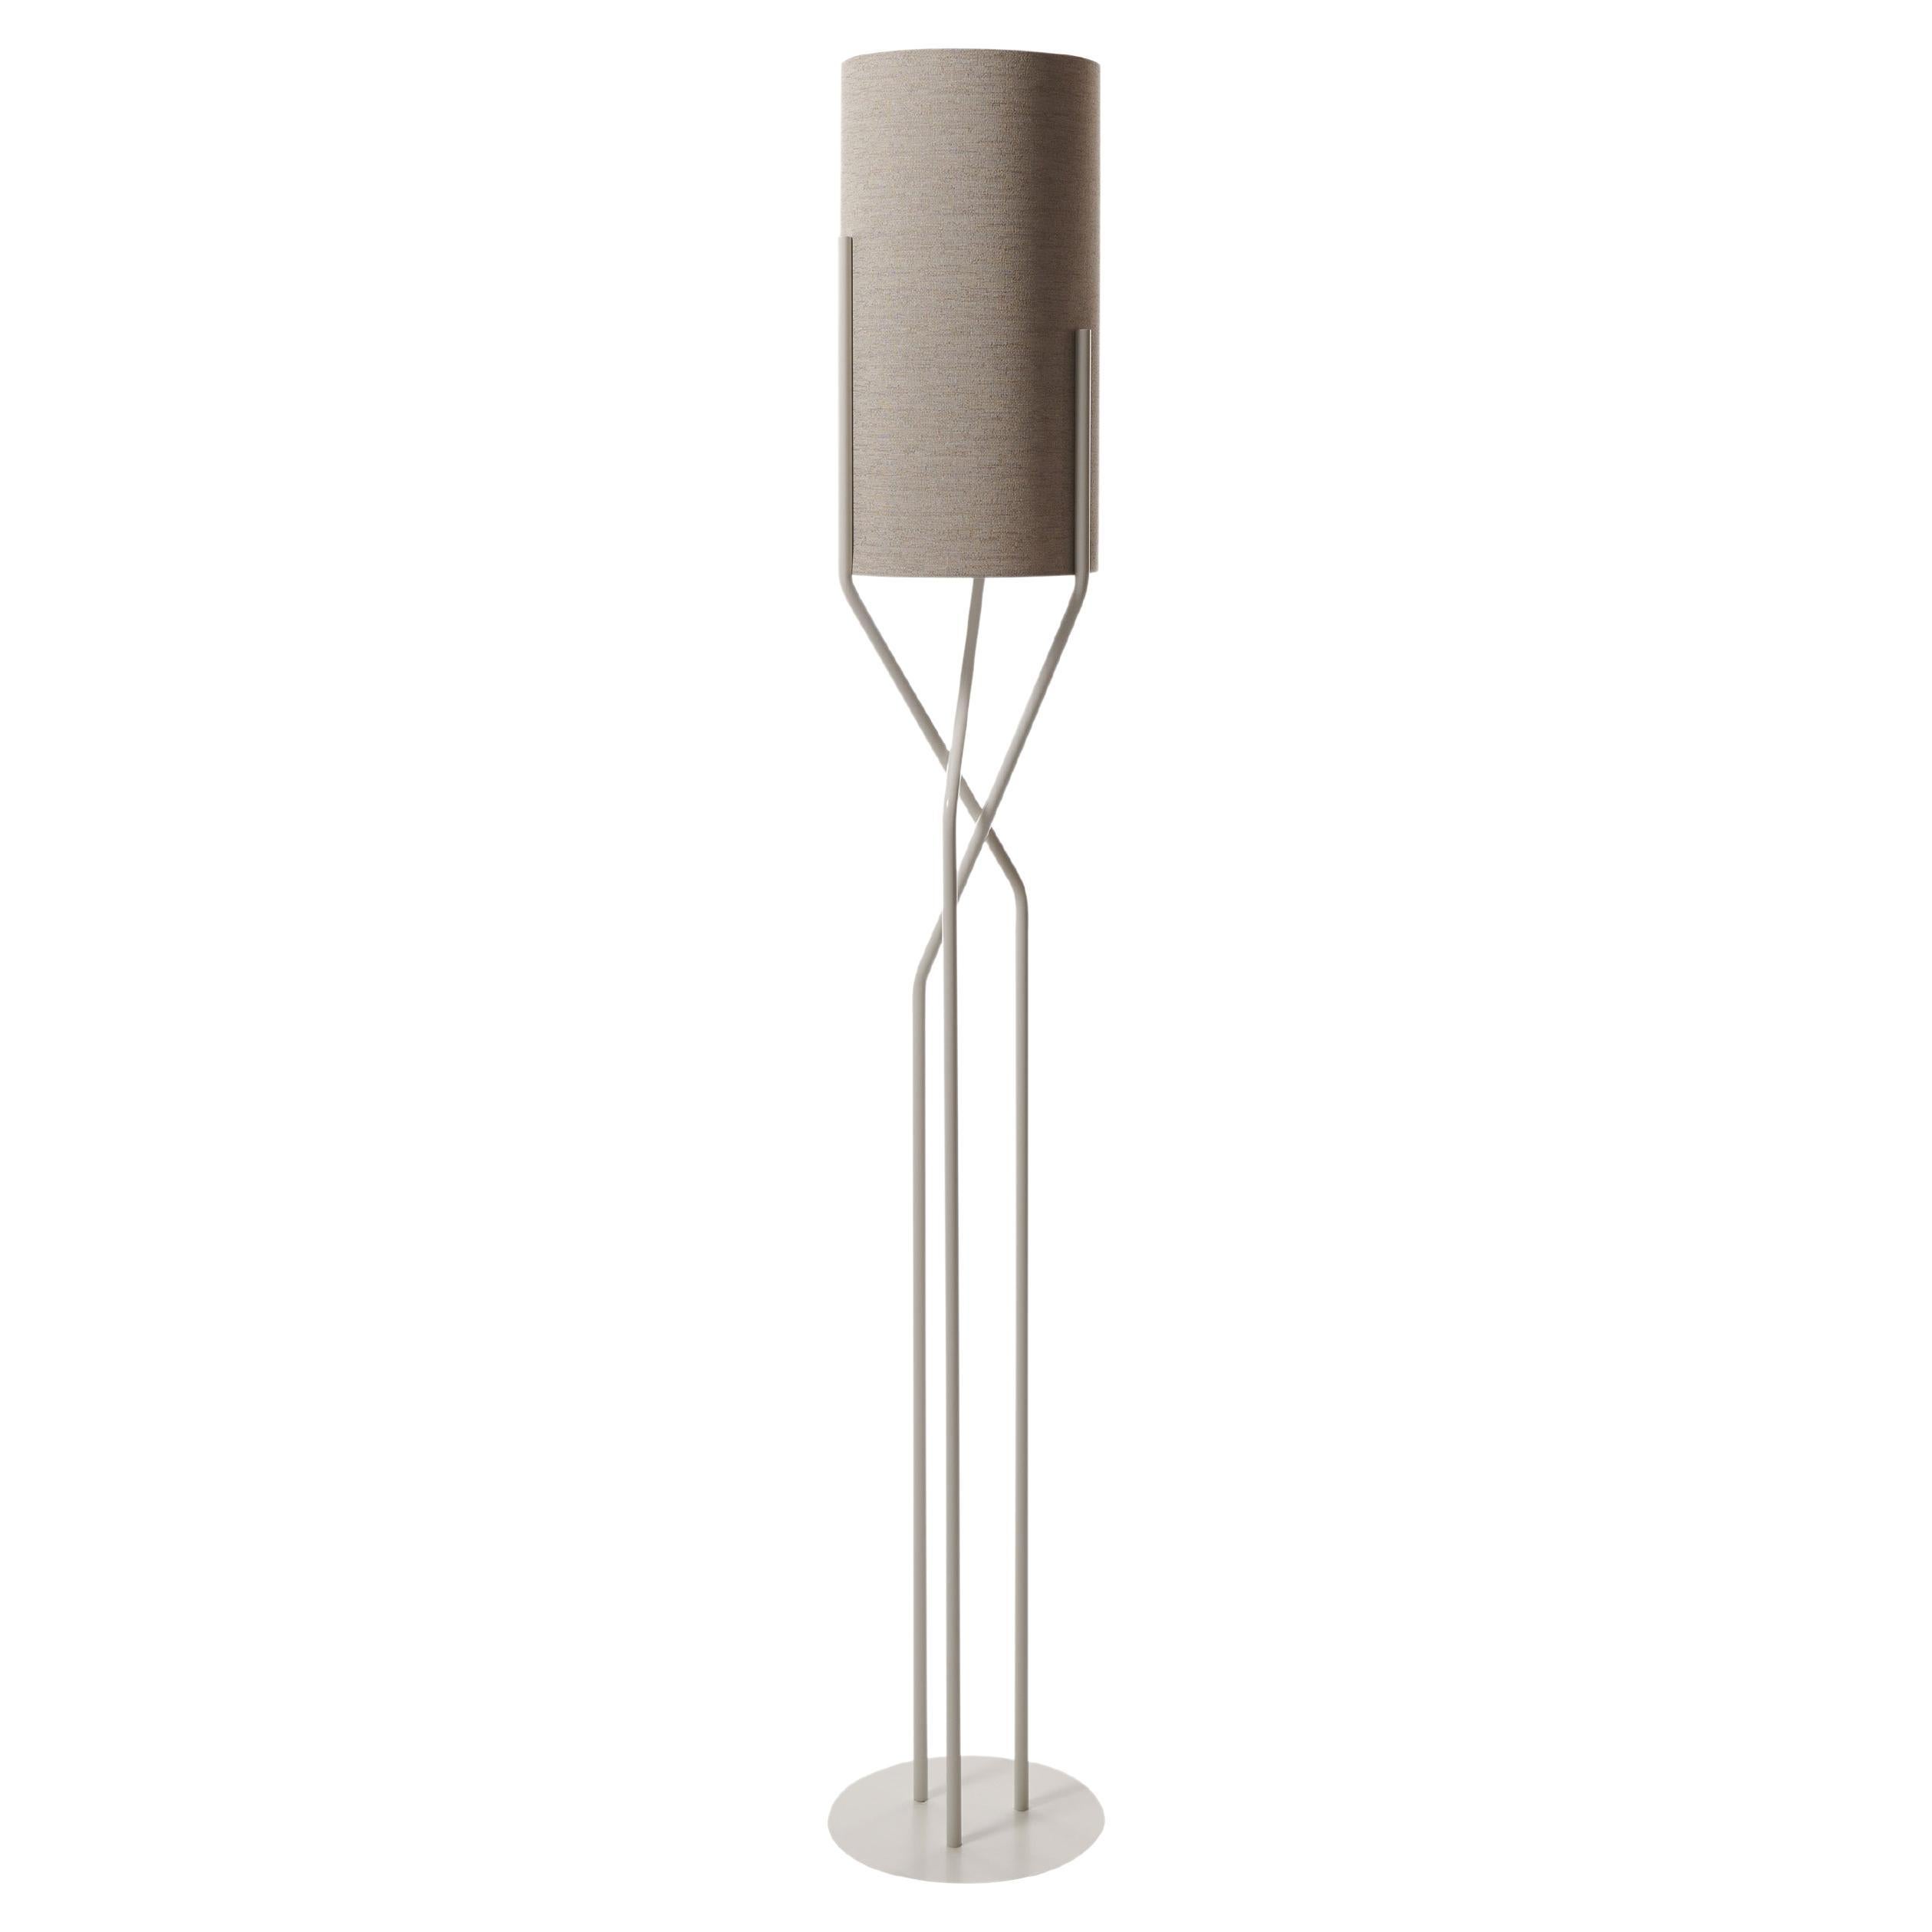 Slide Design Aura Floor Lamp in Melange Ecru Lampshade with White Stem For Sale